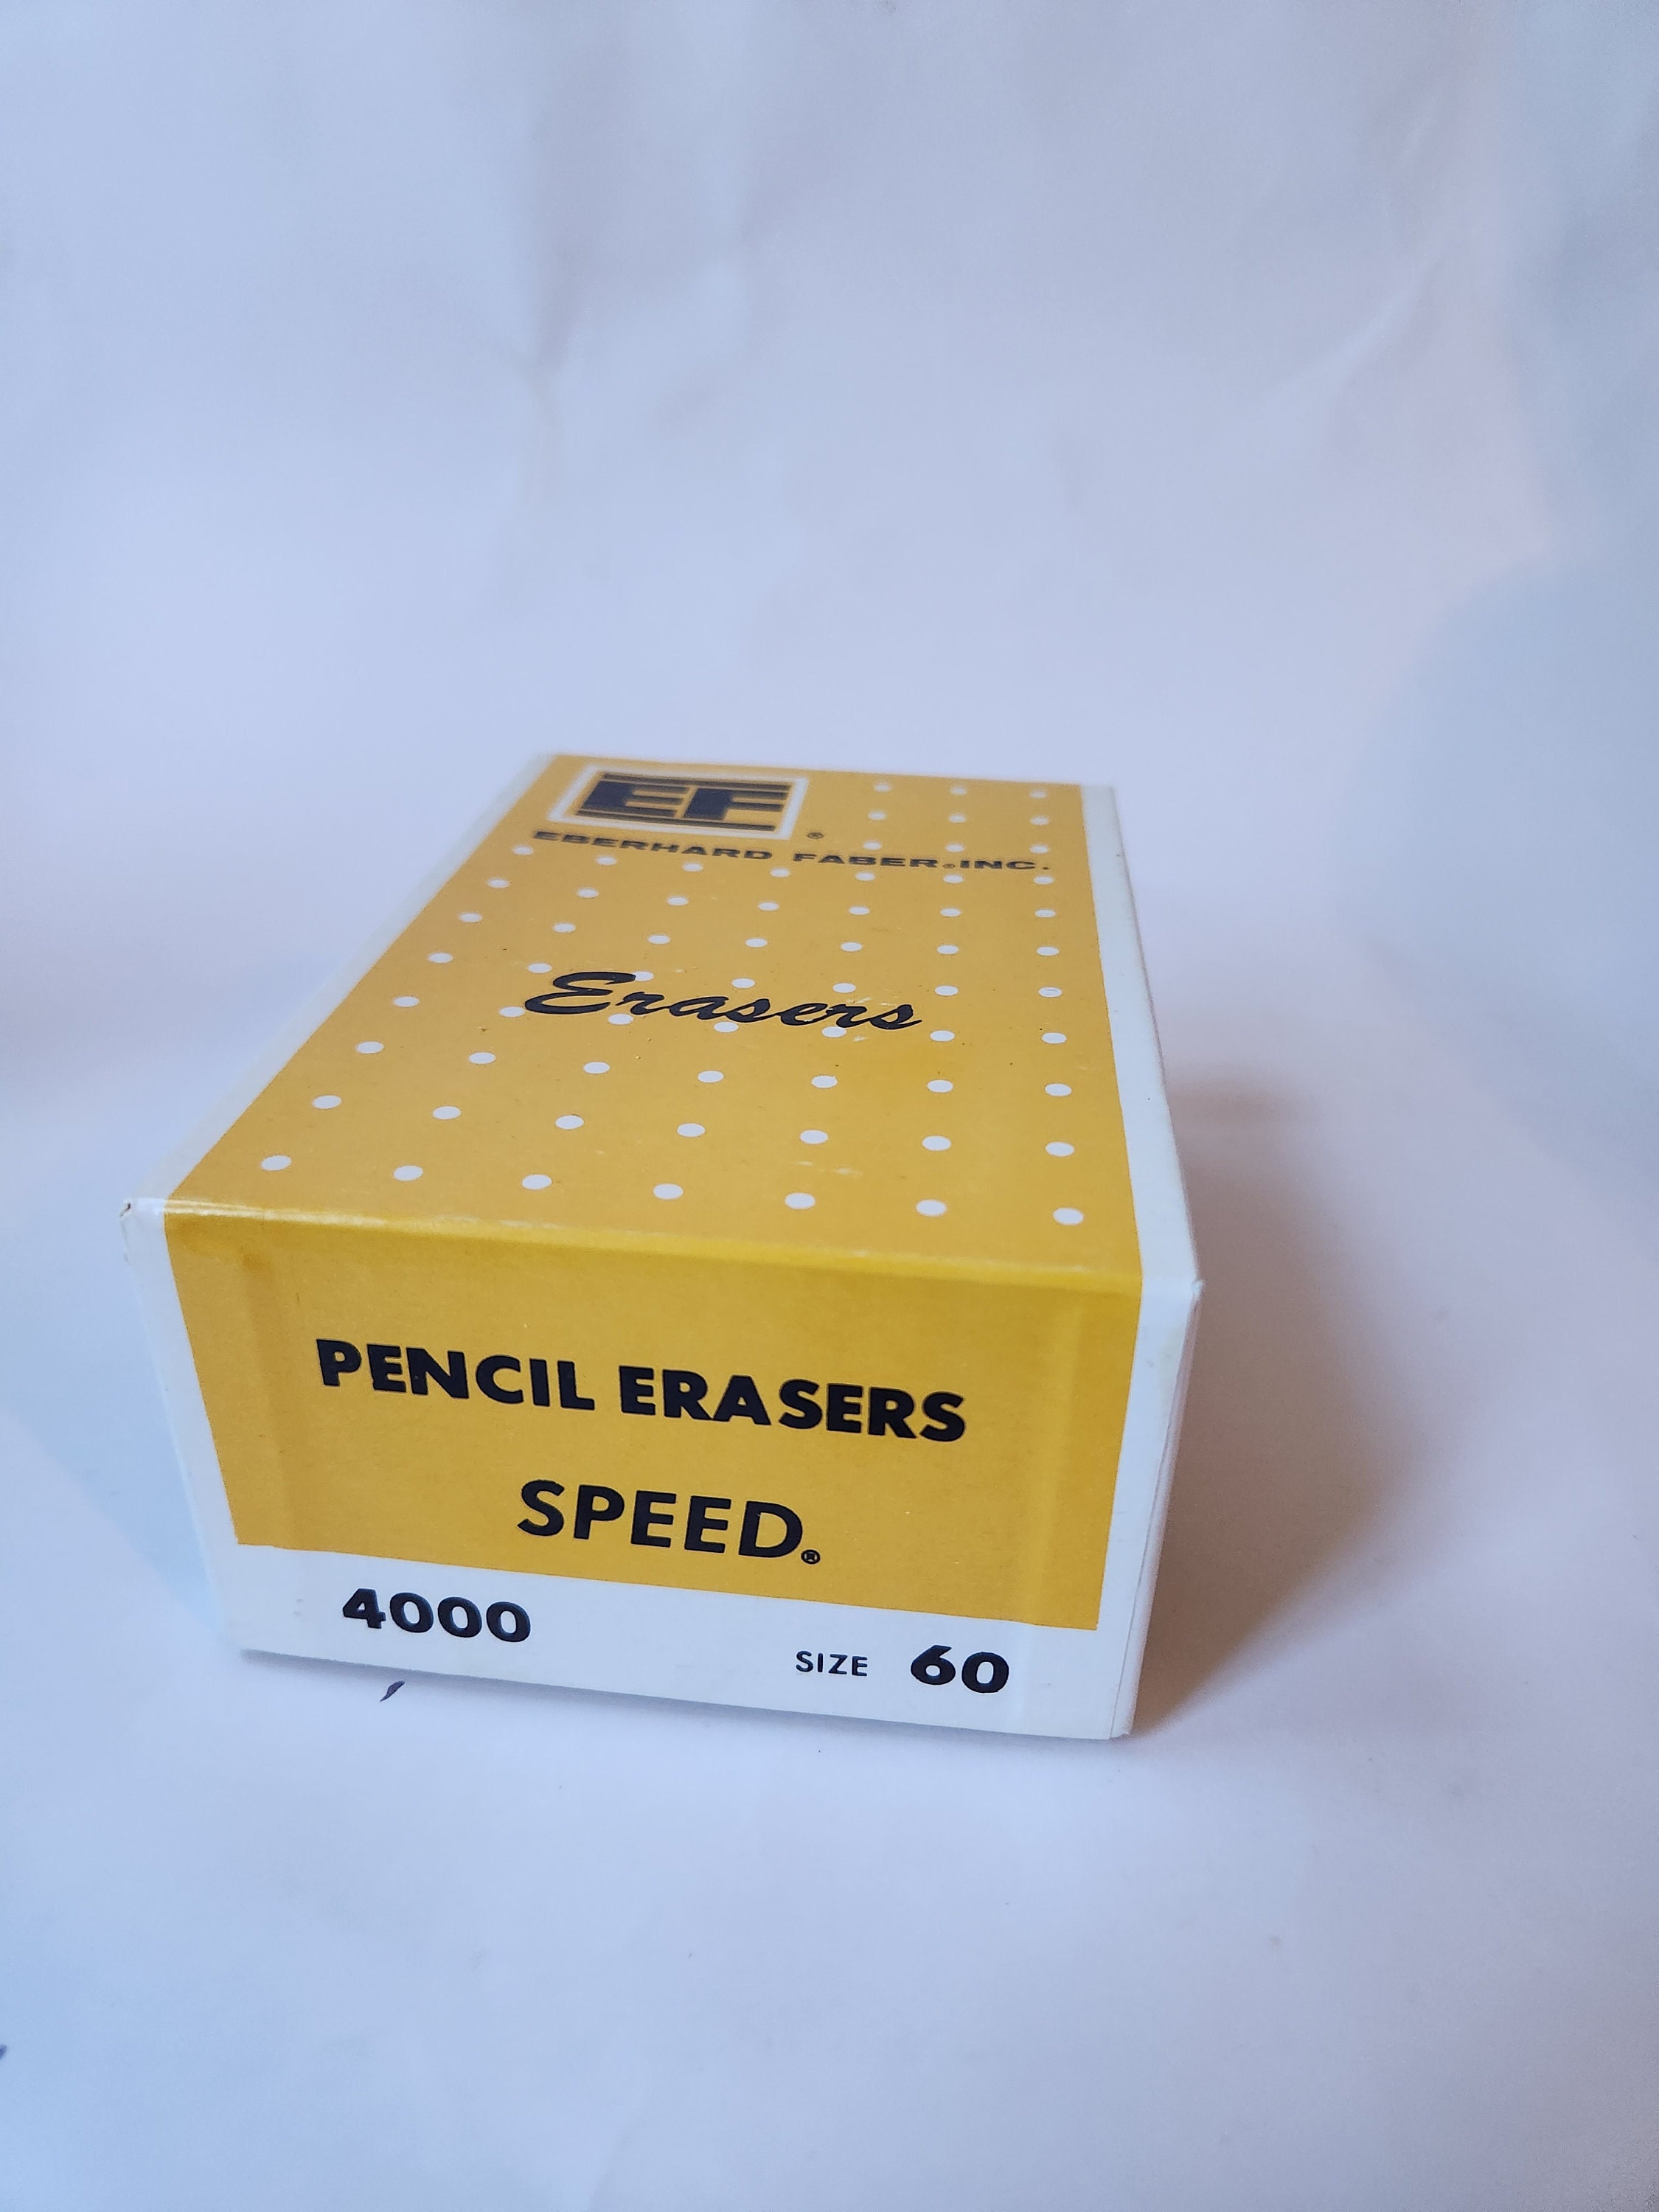 Vintage VITAGUM NO.3 Dry Cleaner Artist Eraser Single Eraser NEW